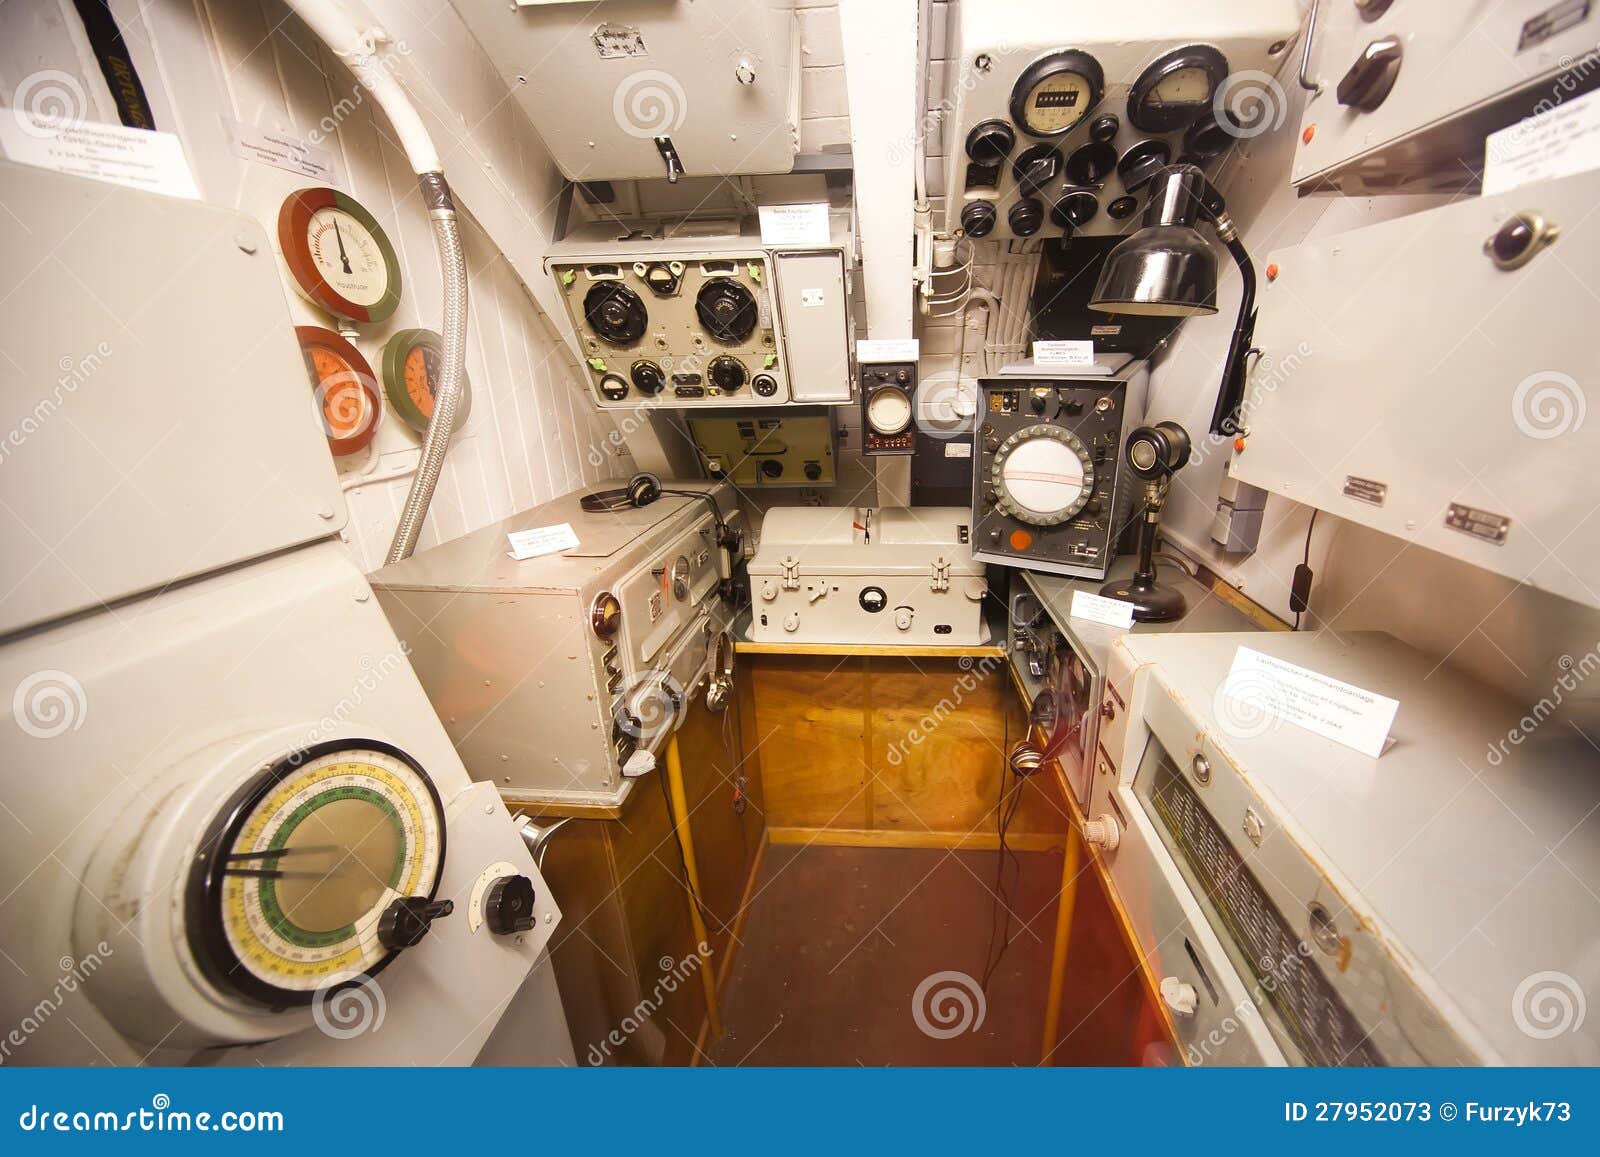 german submarine - sonar compartment